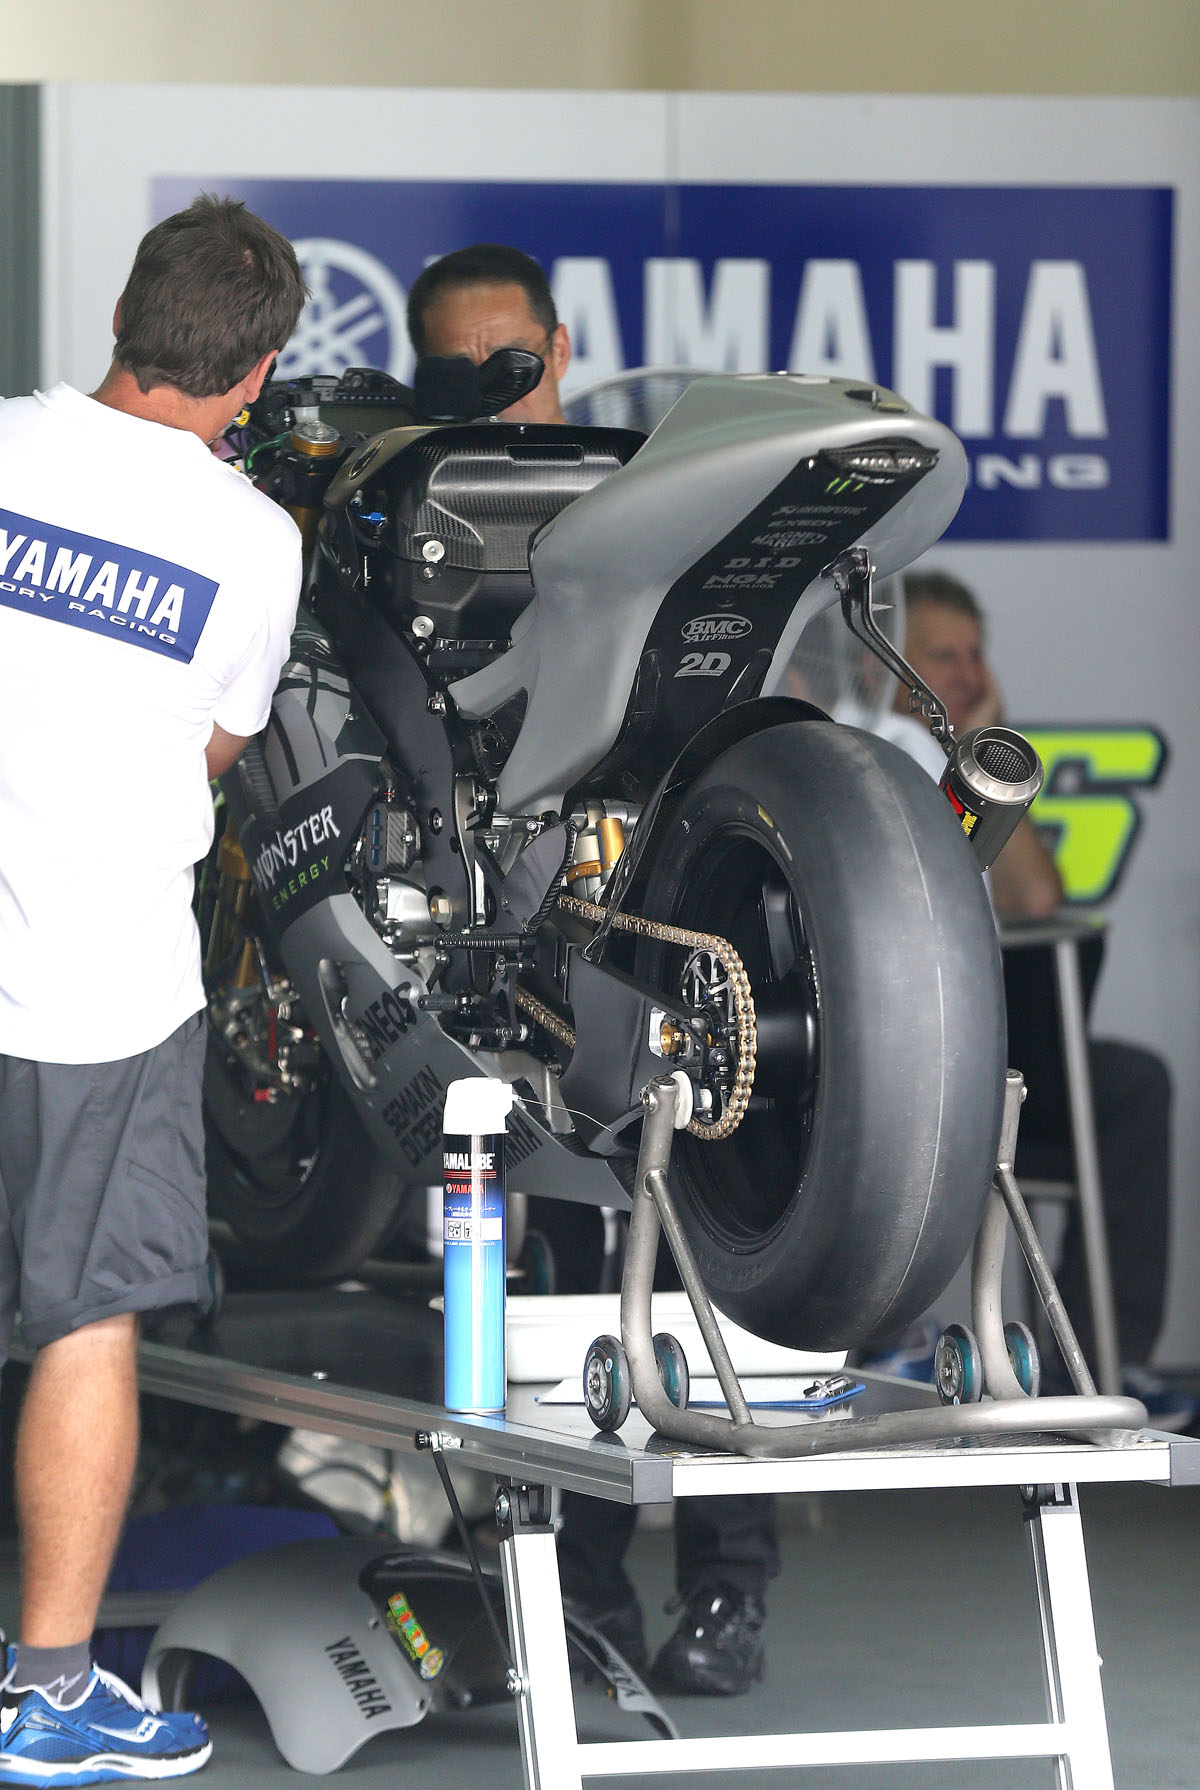 Rossi's test bike revealed